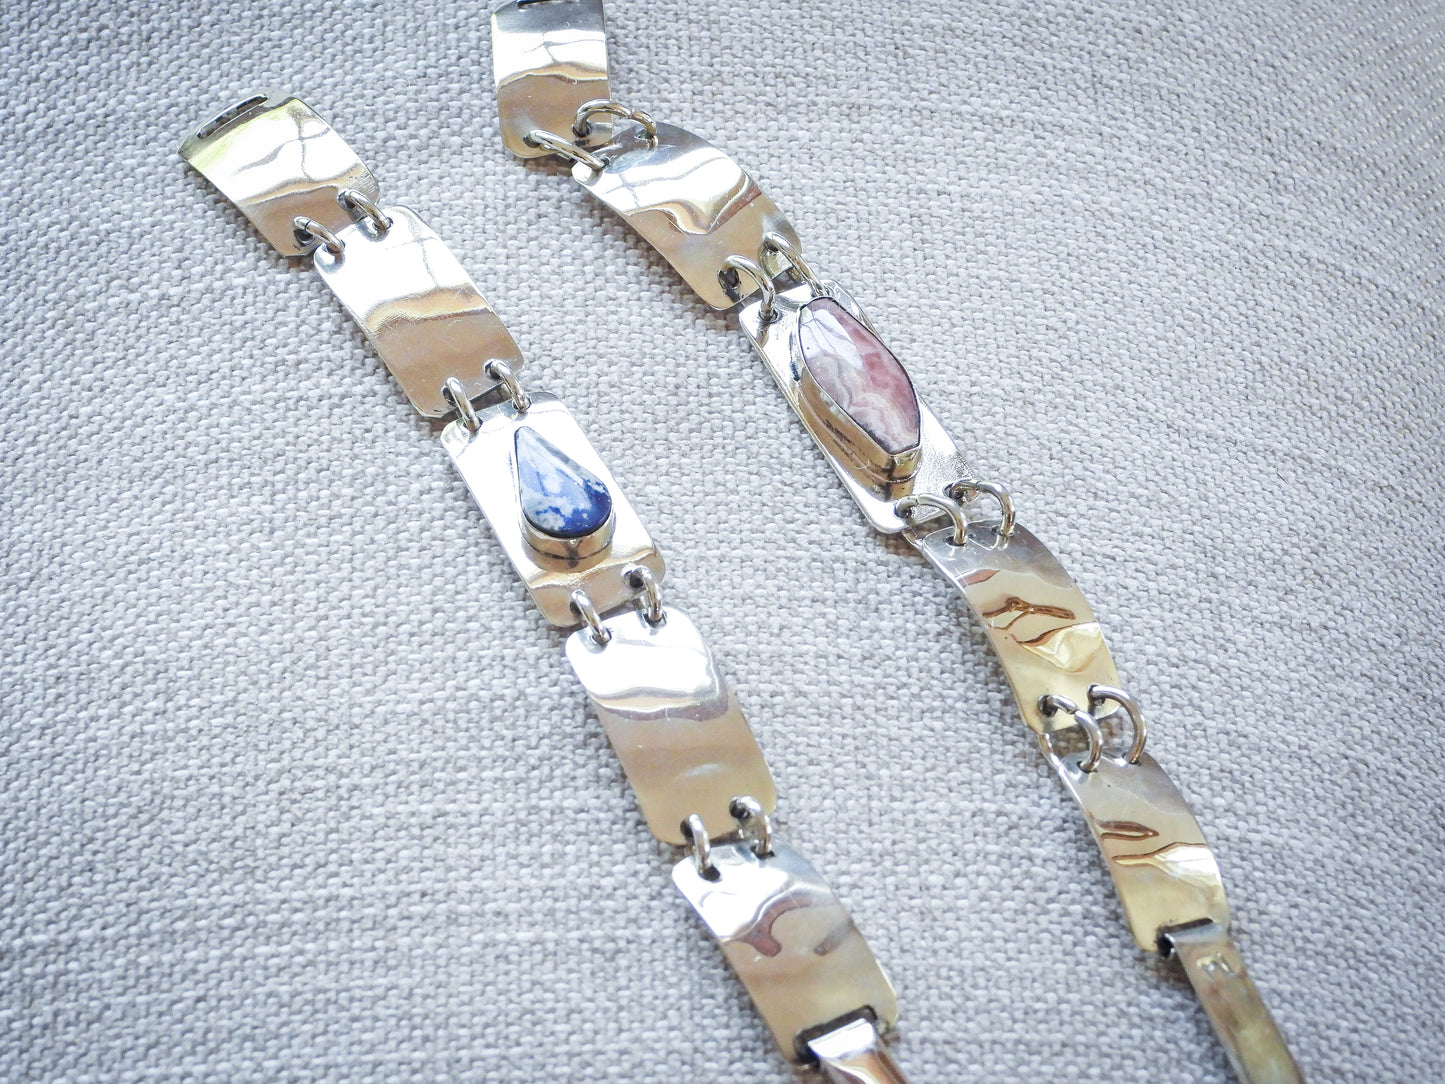 PIEDRAS Bracelet design decorated with stones